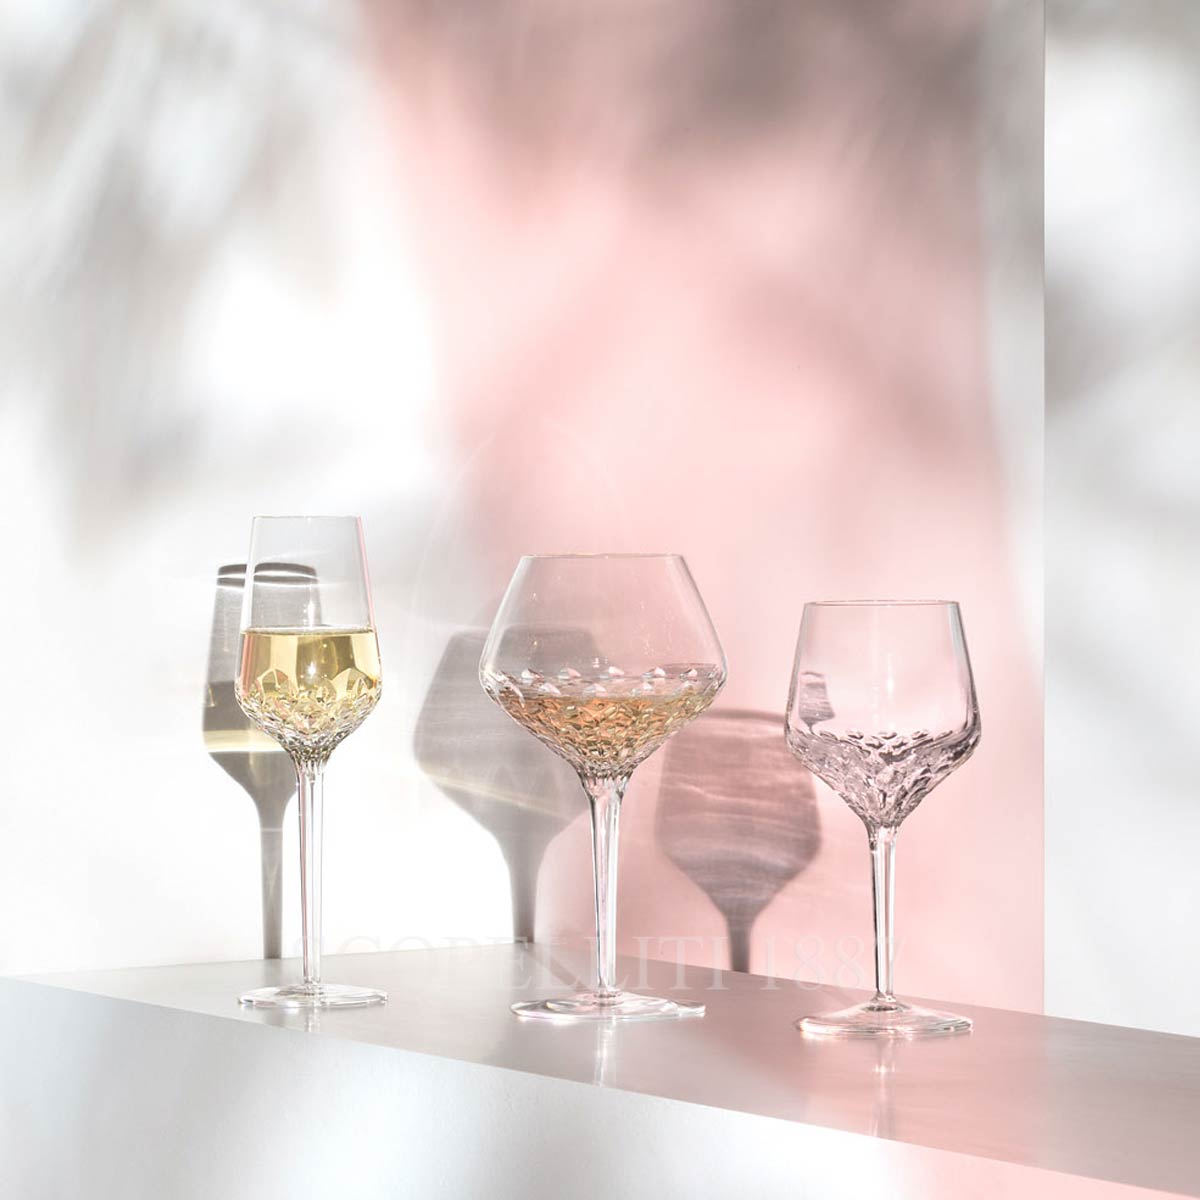 saint louis folia wine glasses